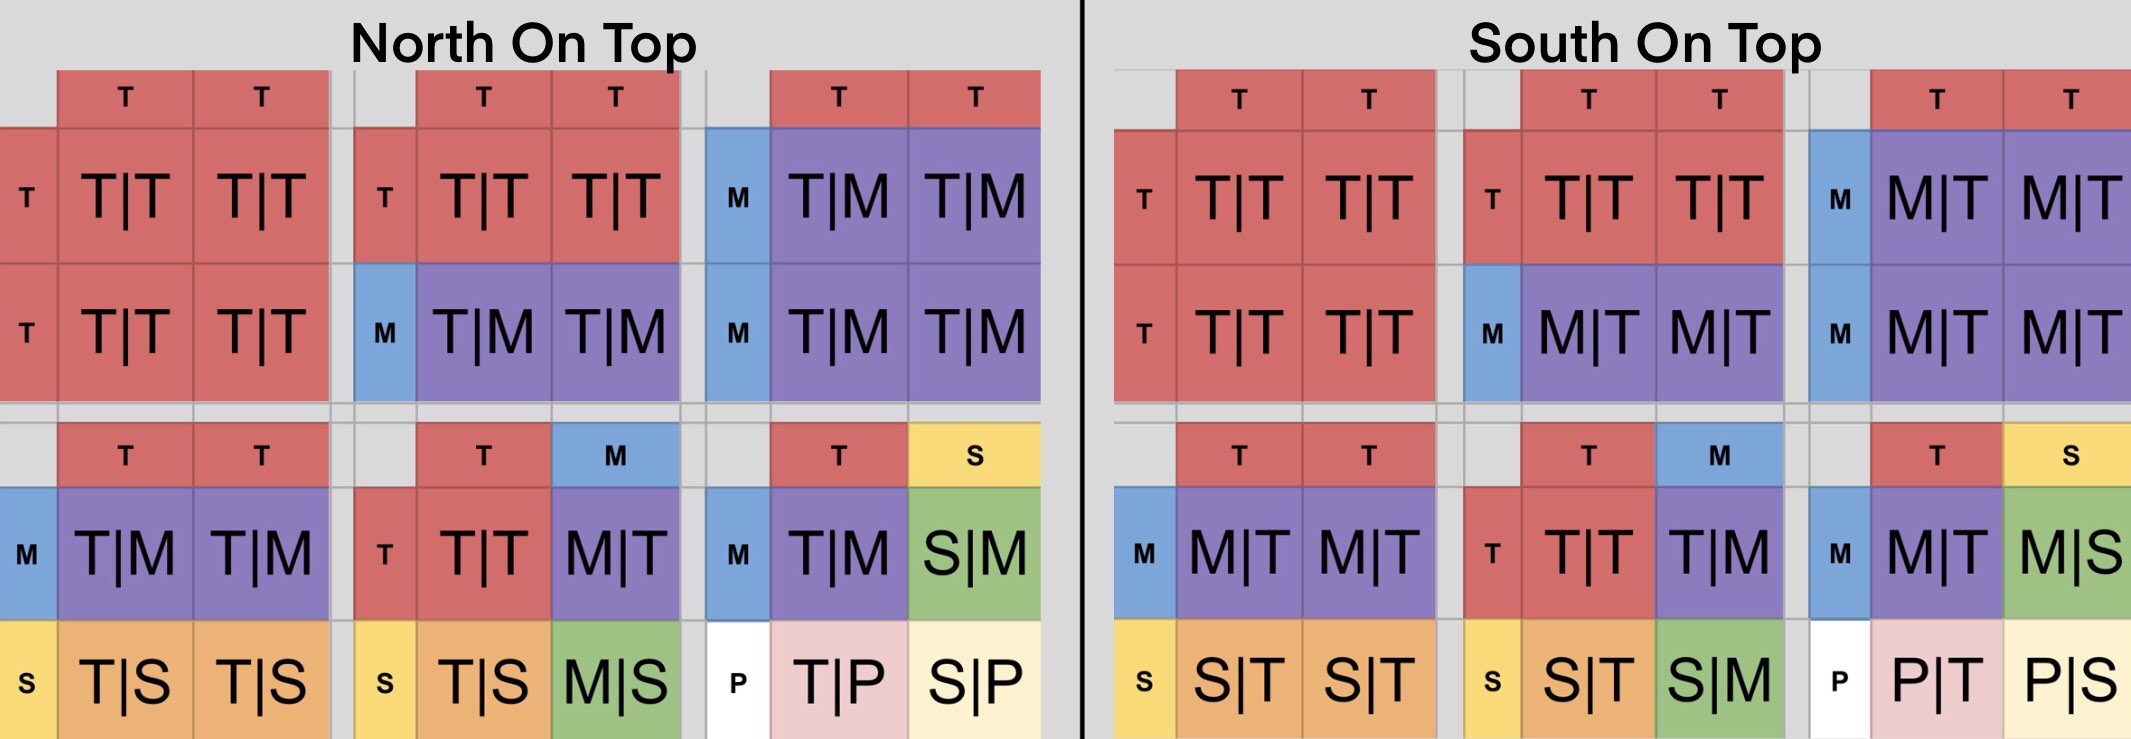 Selection of 2 sets of 6 punnet squares in a 2x3 showing TT TT, TT TS, TT MM, TT MS, TM TS, TS, MP